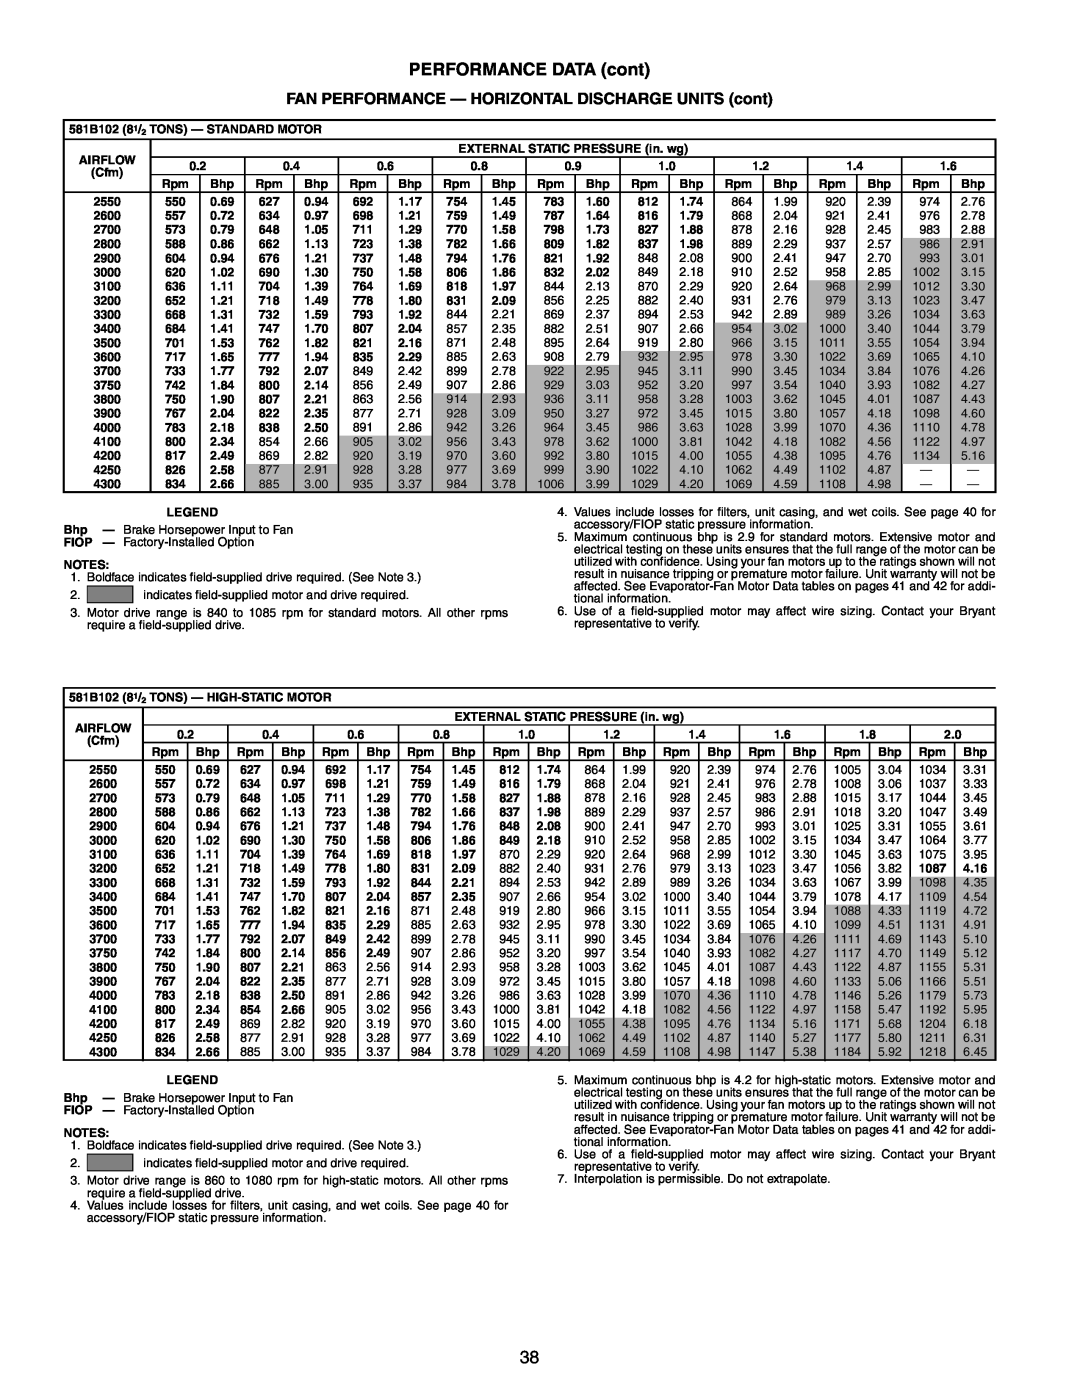 Bryant manual PERFORMANCE DATA cont, 581B102 81/2 TONS — STANDARD MOTOR 